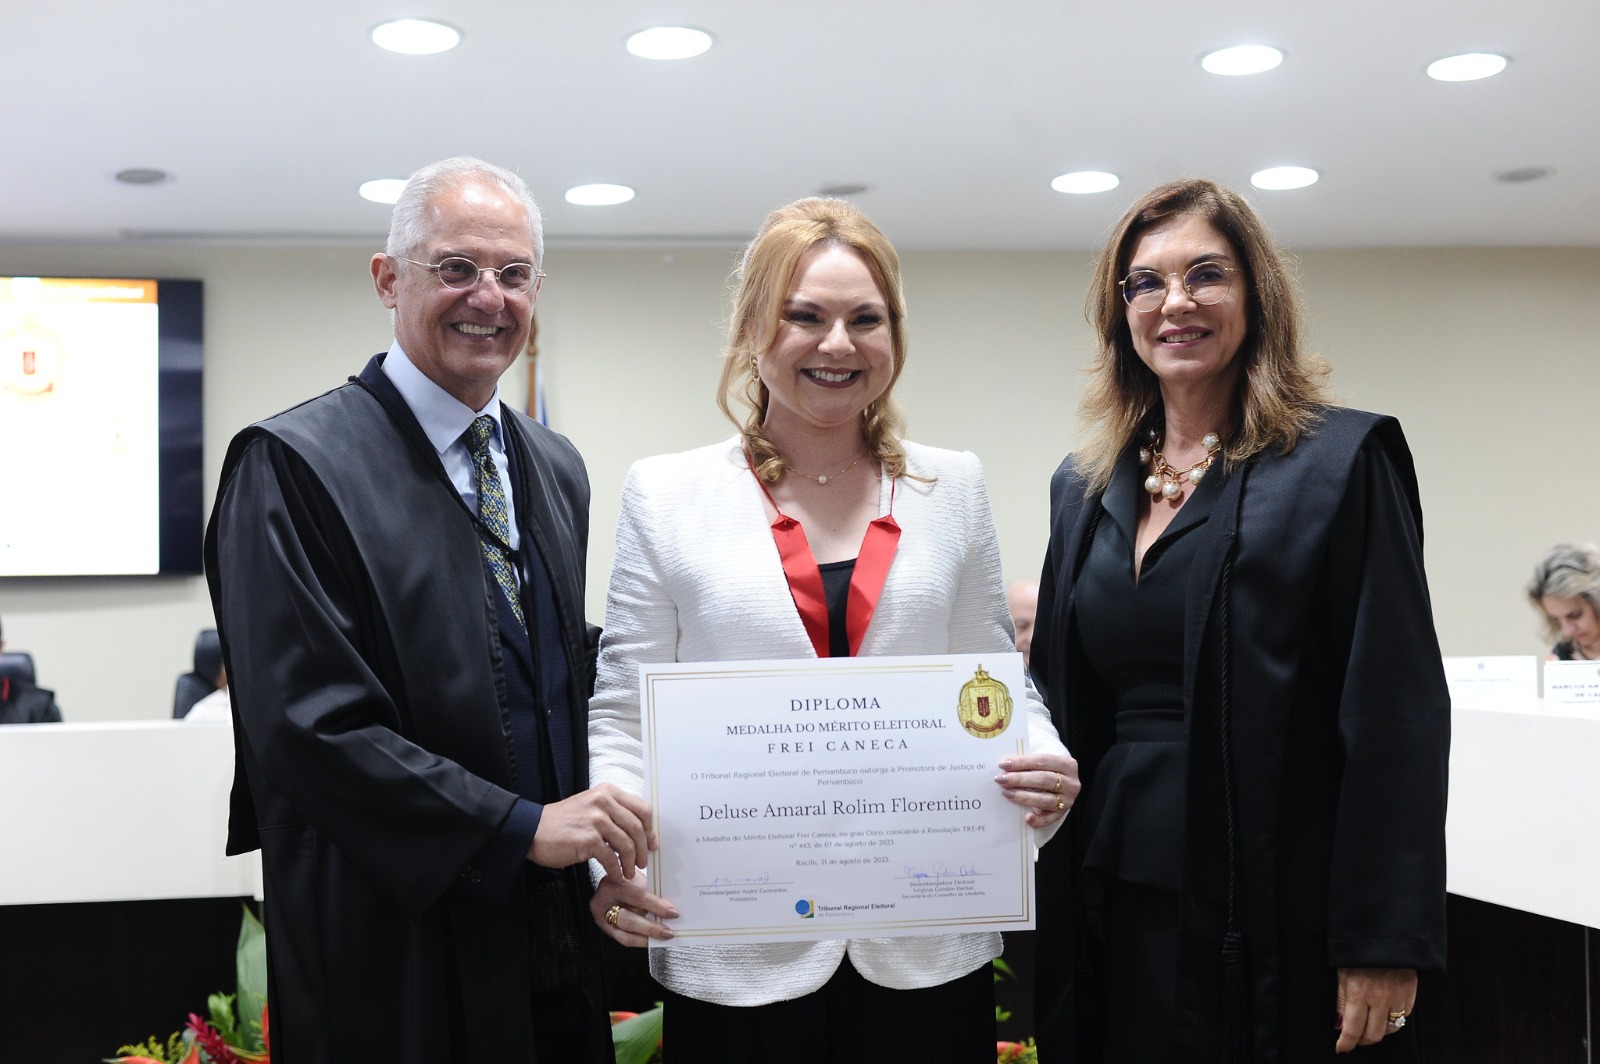 Tribunal Regional Eleitoral de Pernambuco